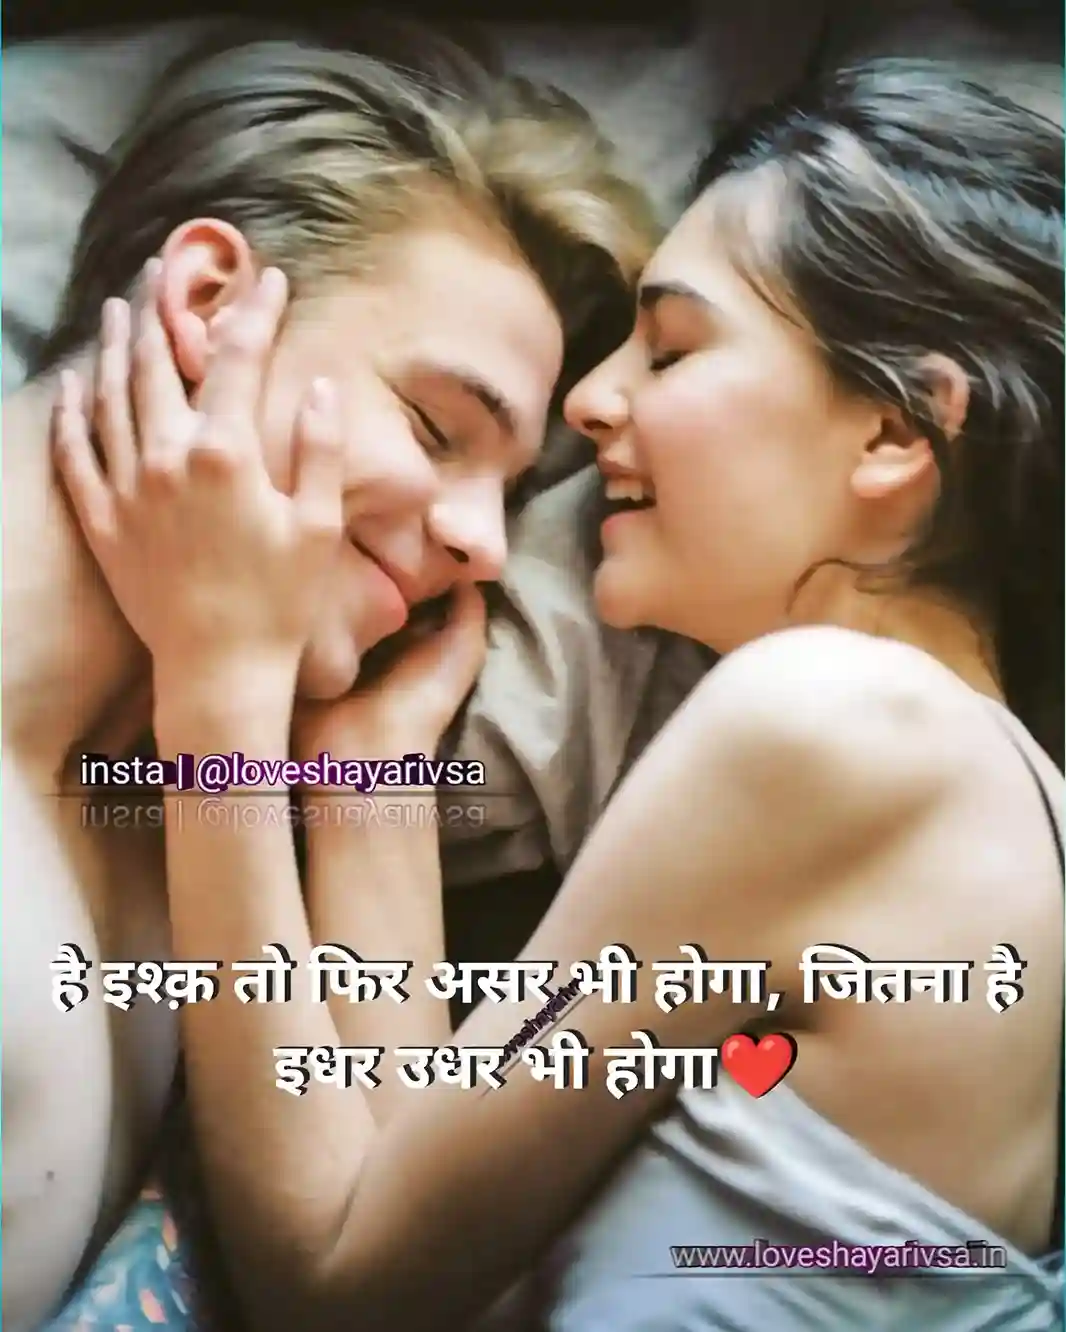 love shayari in hindi for boyfriend with image